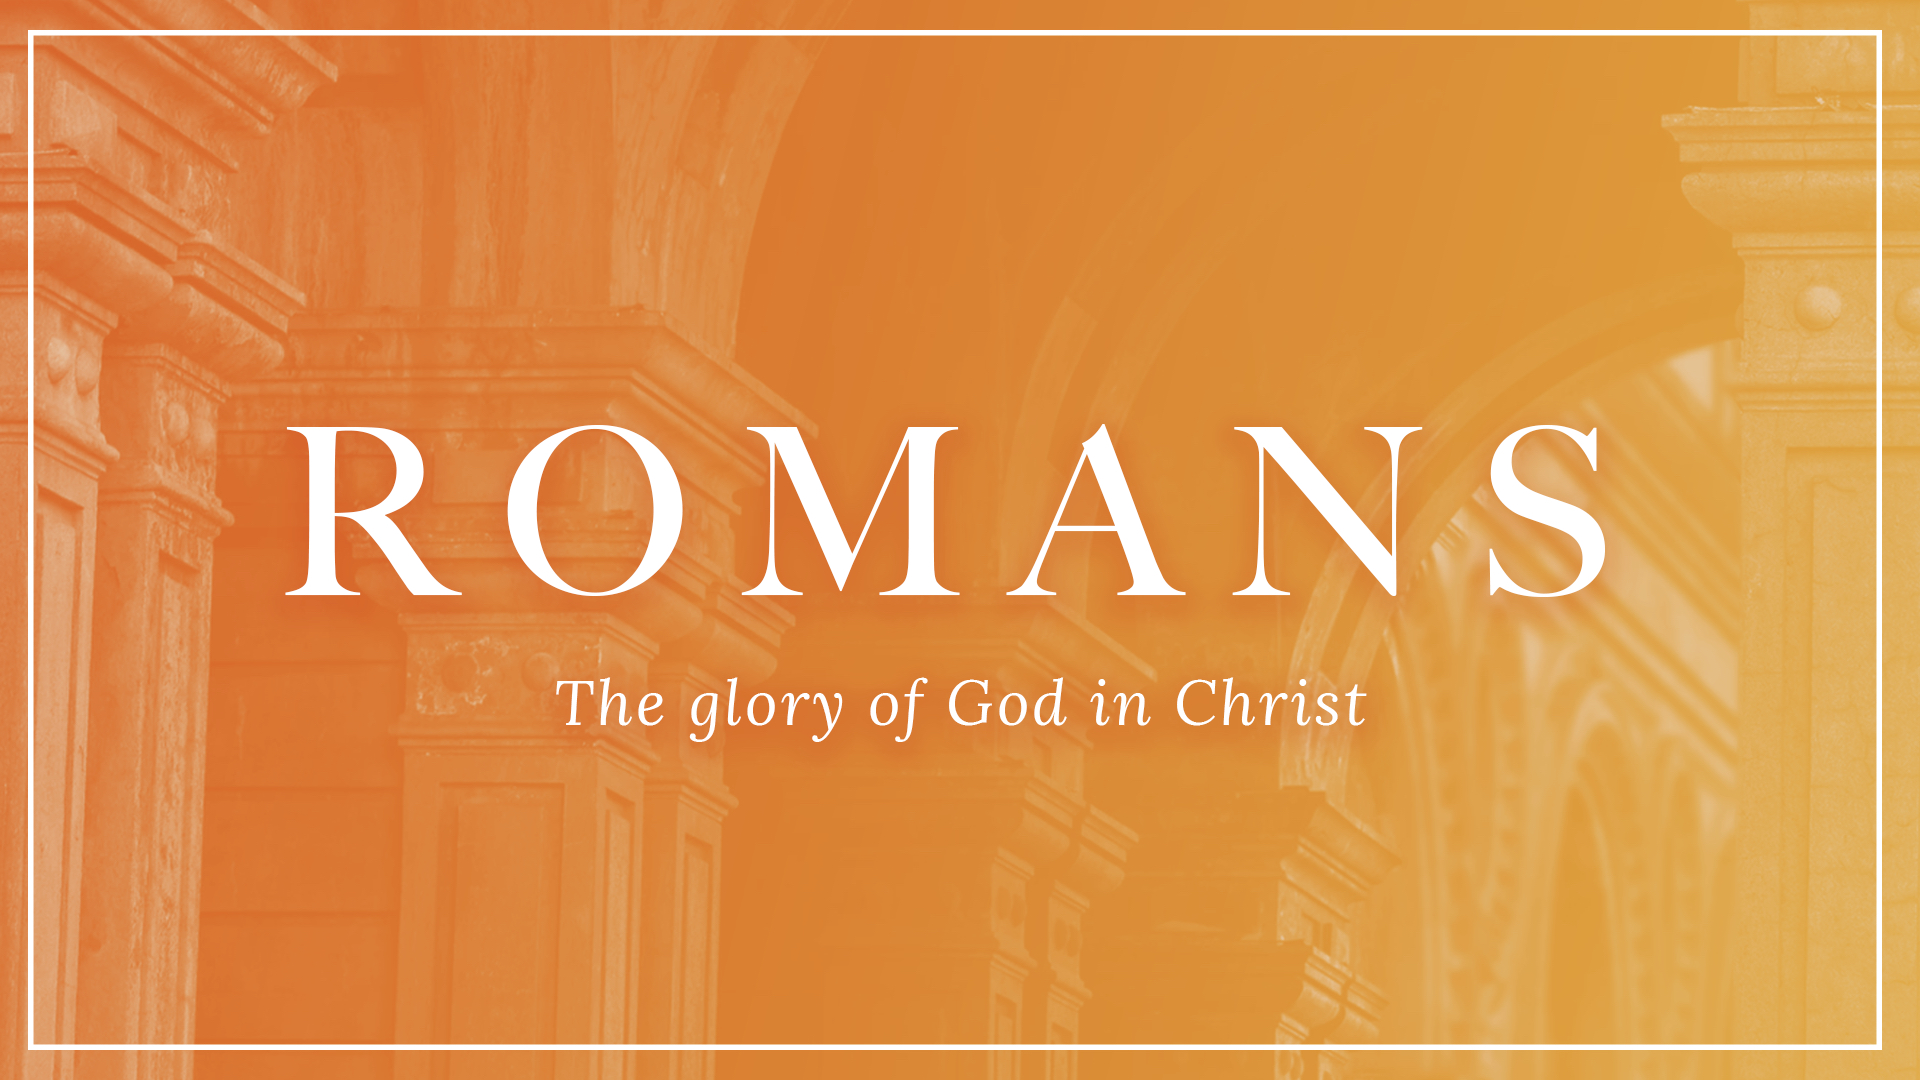 Our Response to God's Glory Pt 1 - A Sacrificial Life